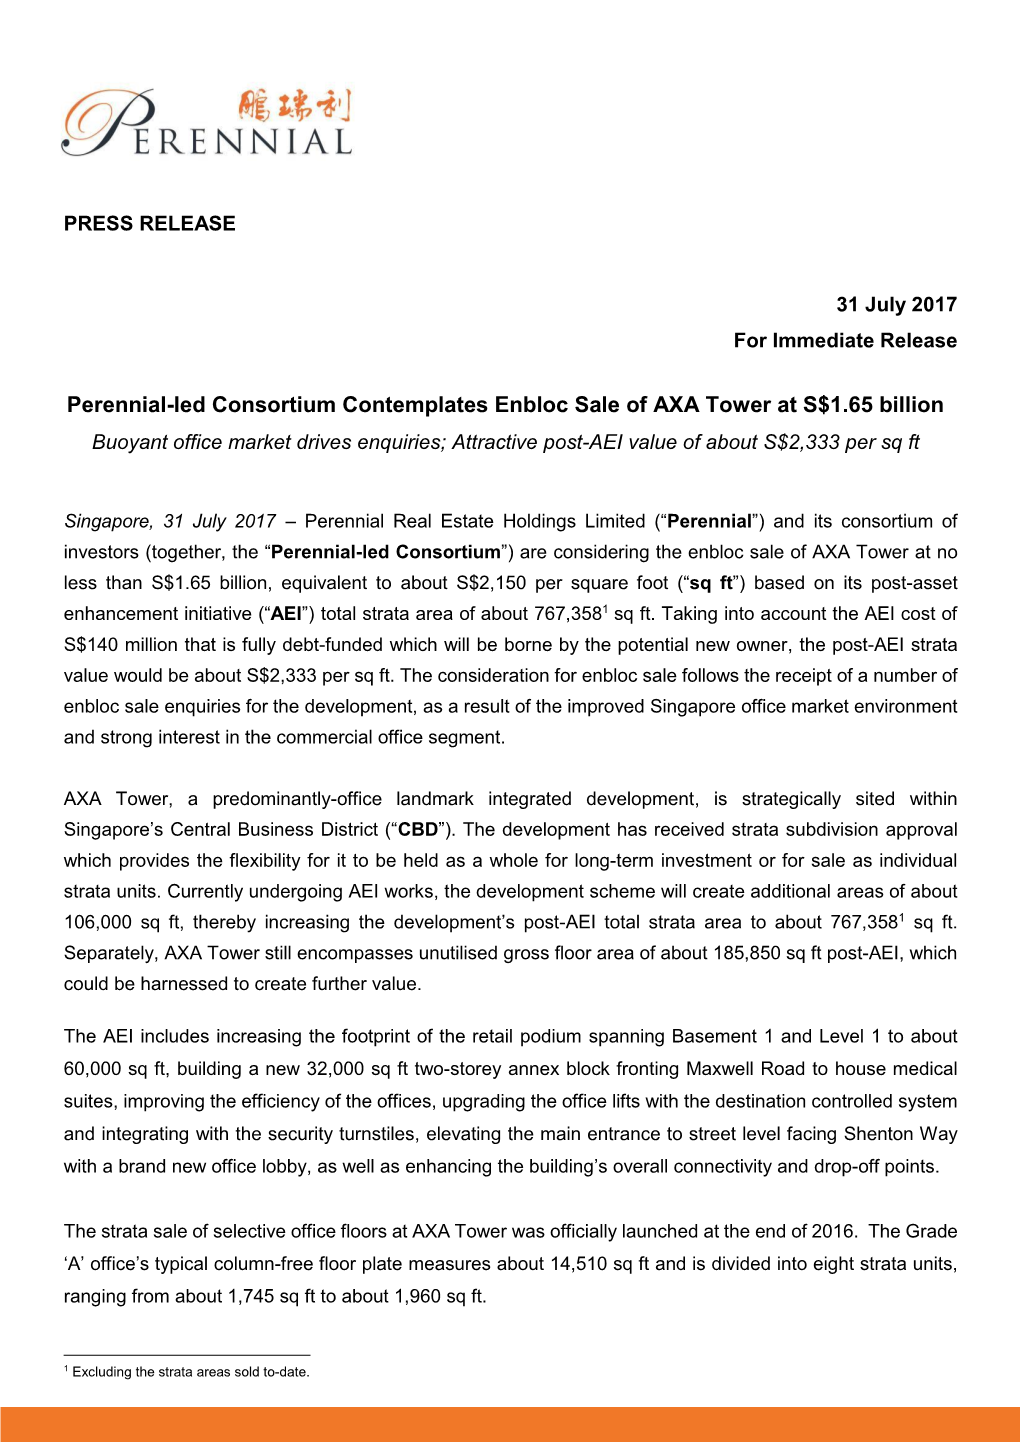 Perennial-Led Consortium Contemplates Enbloc Sale of AXA Tower at S$1.65 Billion